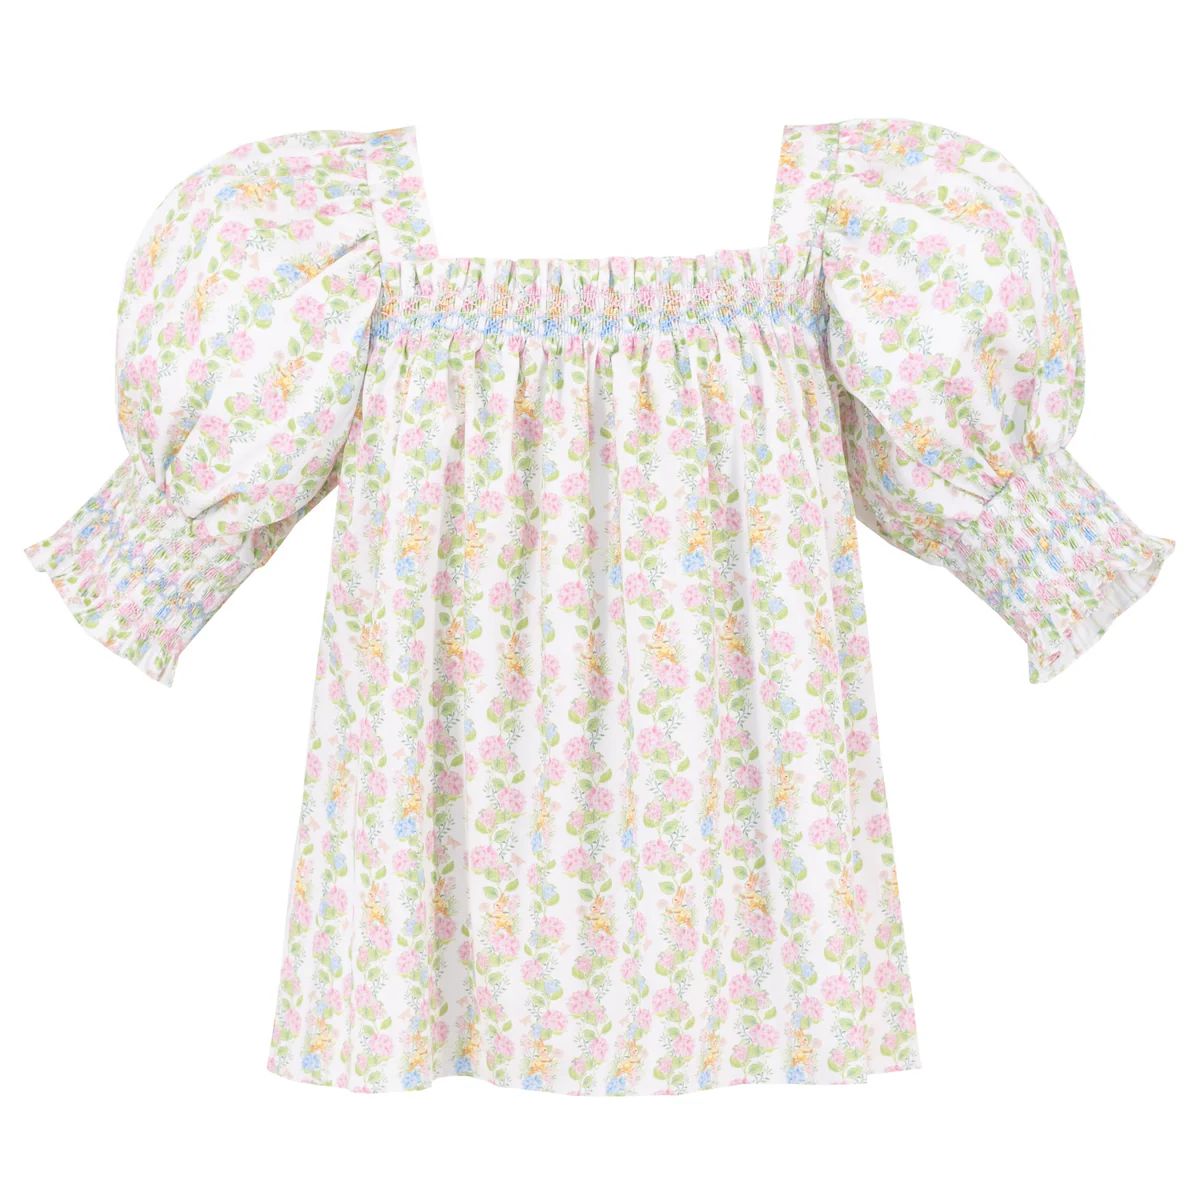 Women's Eloise Shirt - Hydrangea Garden Floral | Dondolo